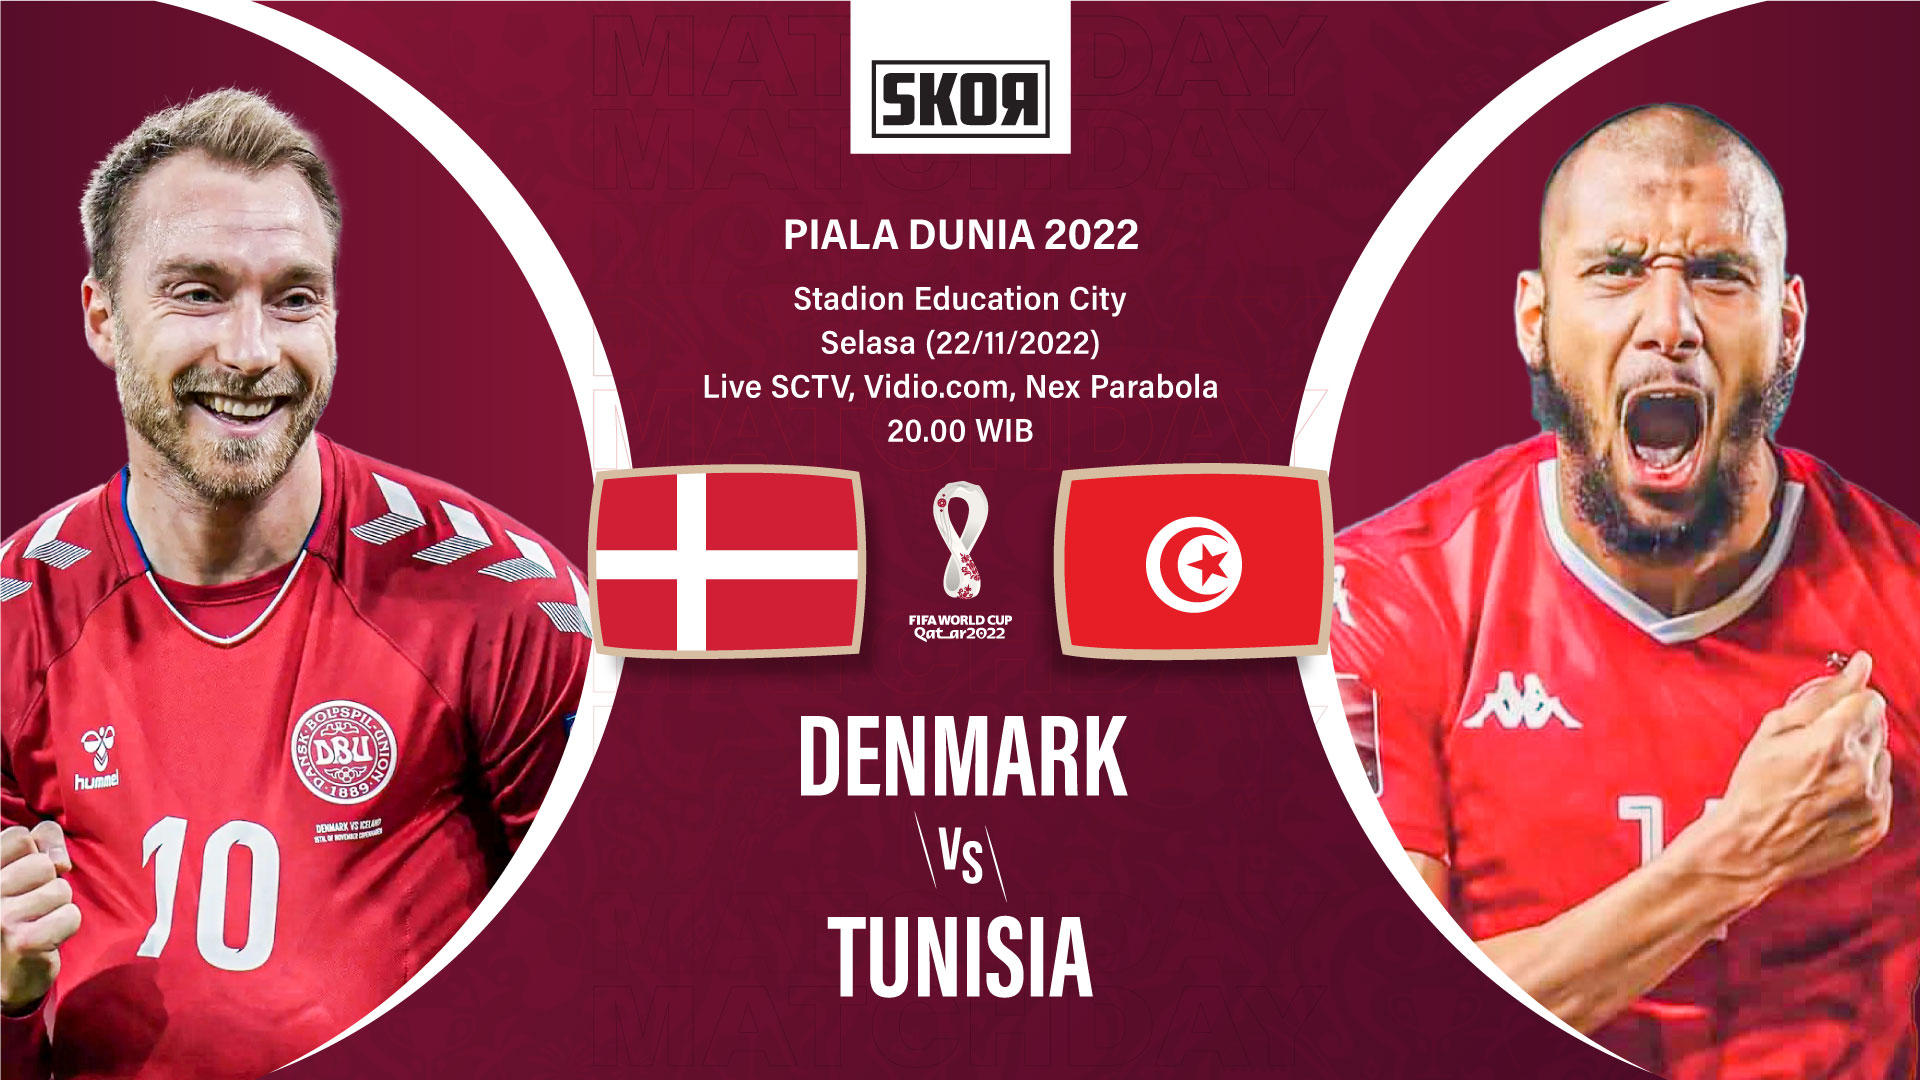 Piala Dunia 2022: 5 Fakta Menarik Laga Denmark vs Tunisia